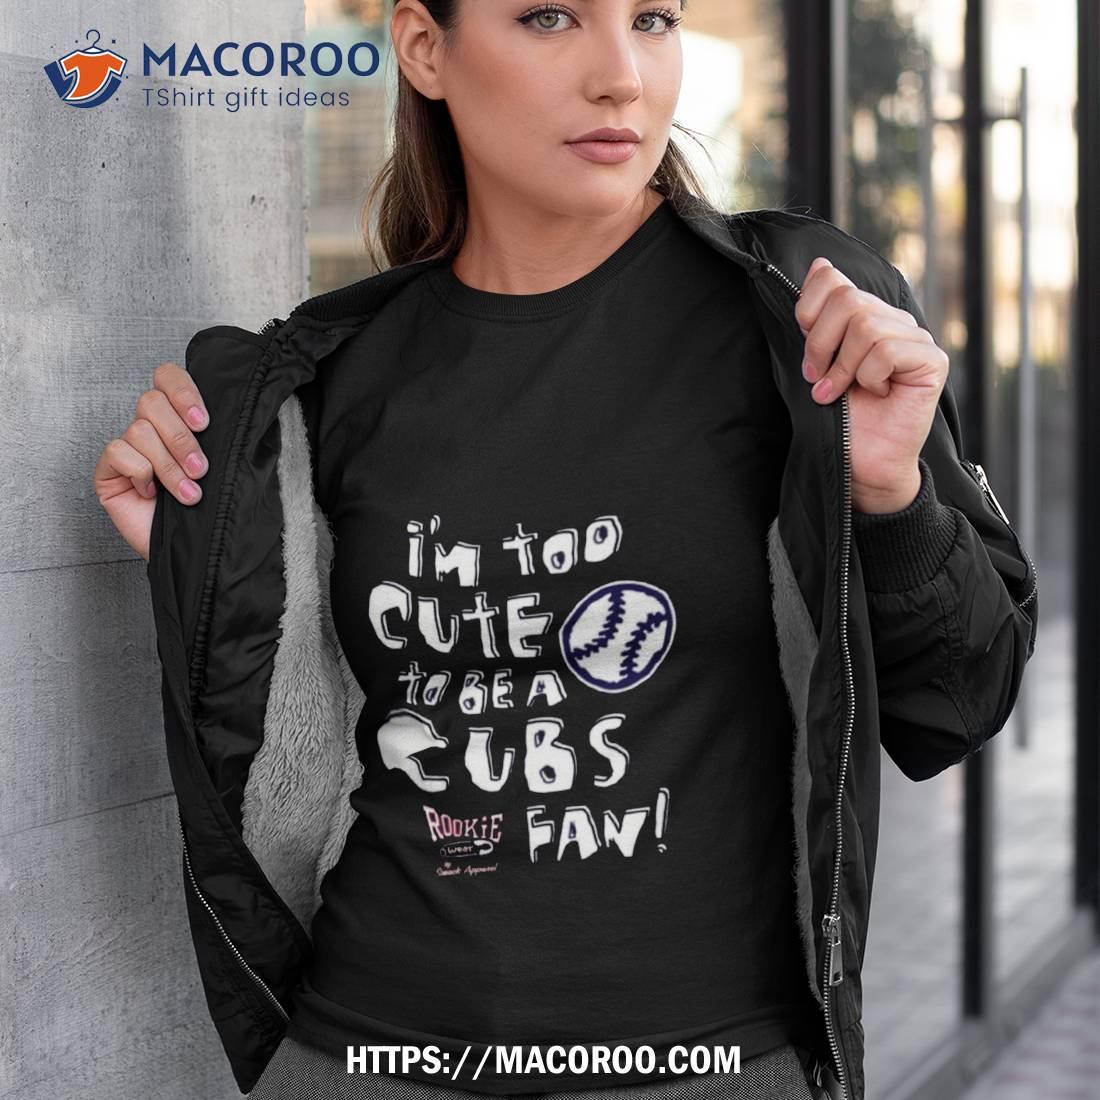 Baseball Fan T-Shirts for Sale